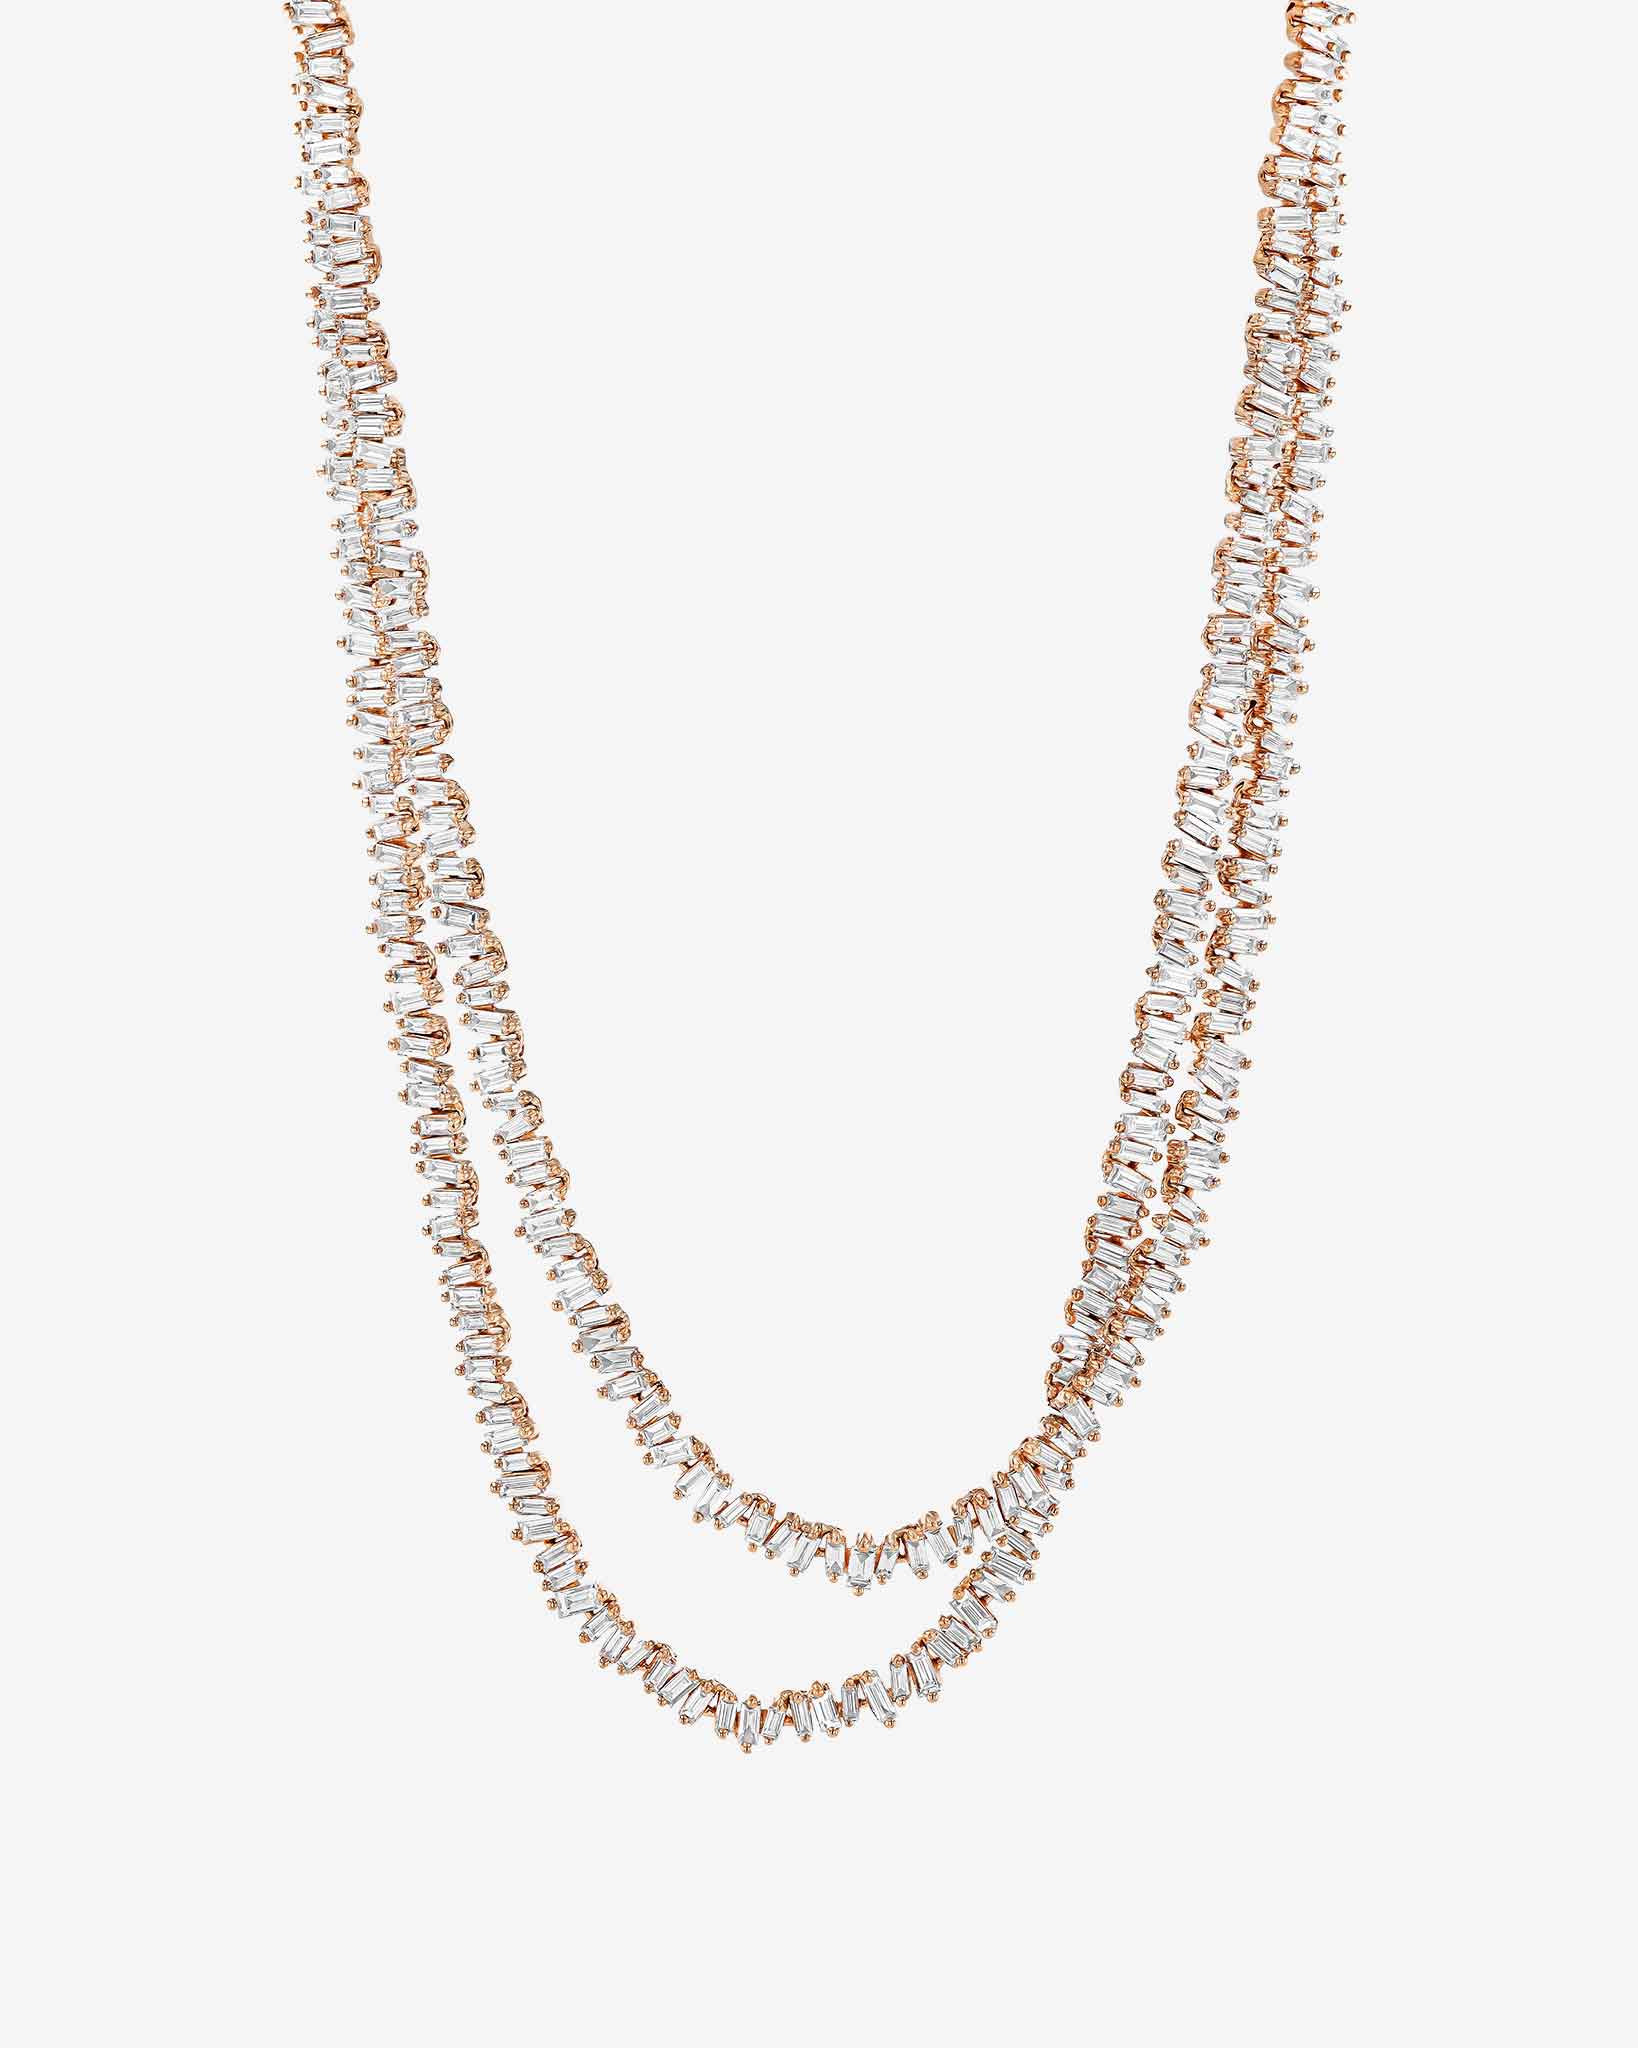 Suzanne Kalan Classic Diamond 36" Inch Mini Baguette Tennis Necklace in 18k rose gold